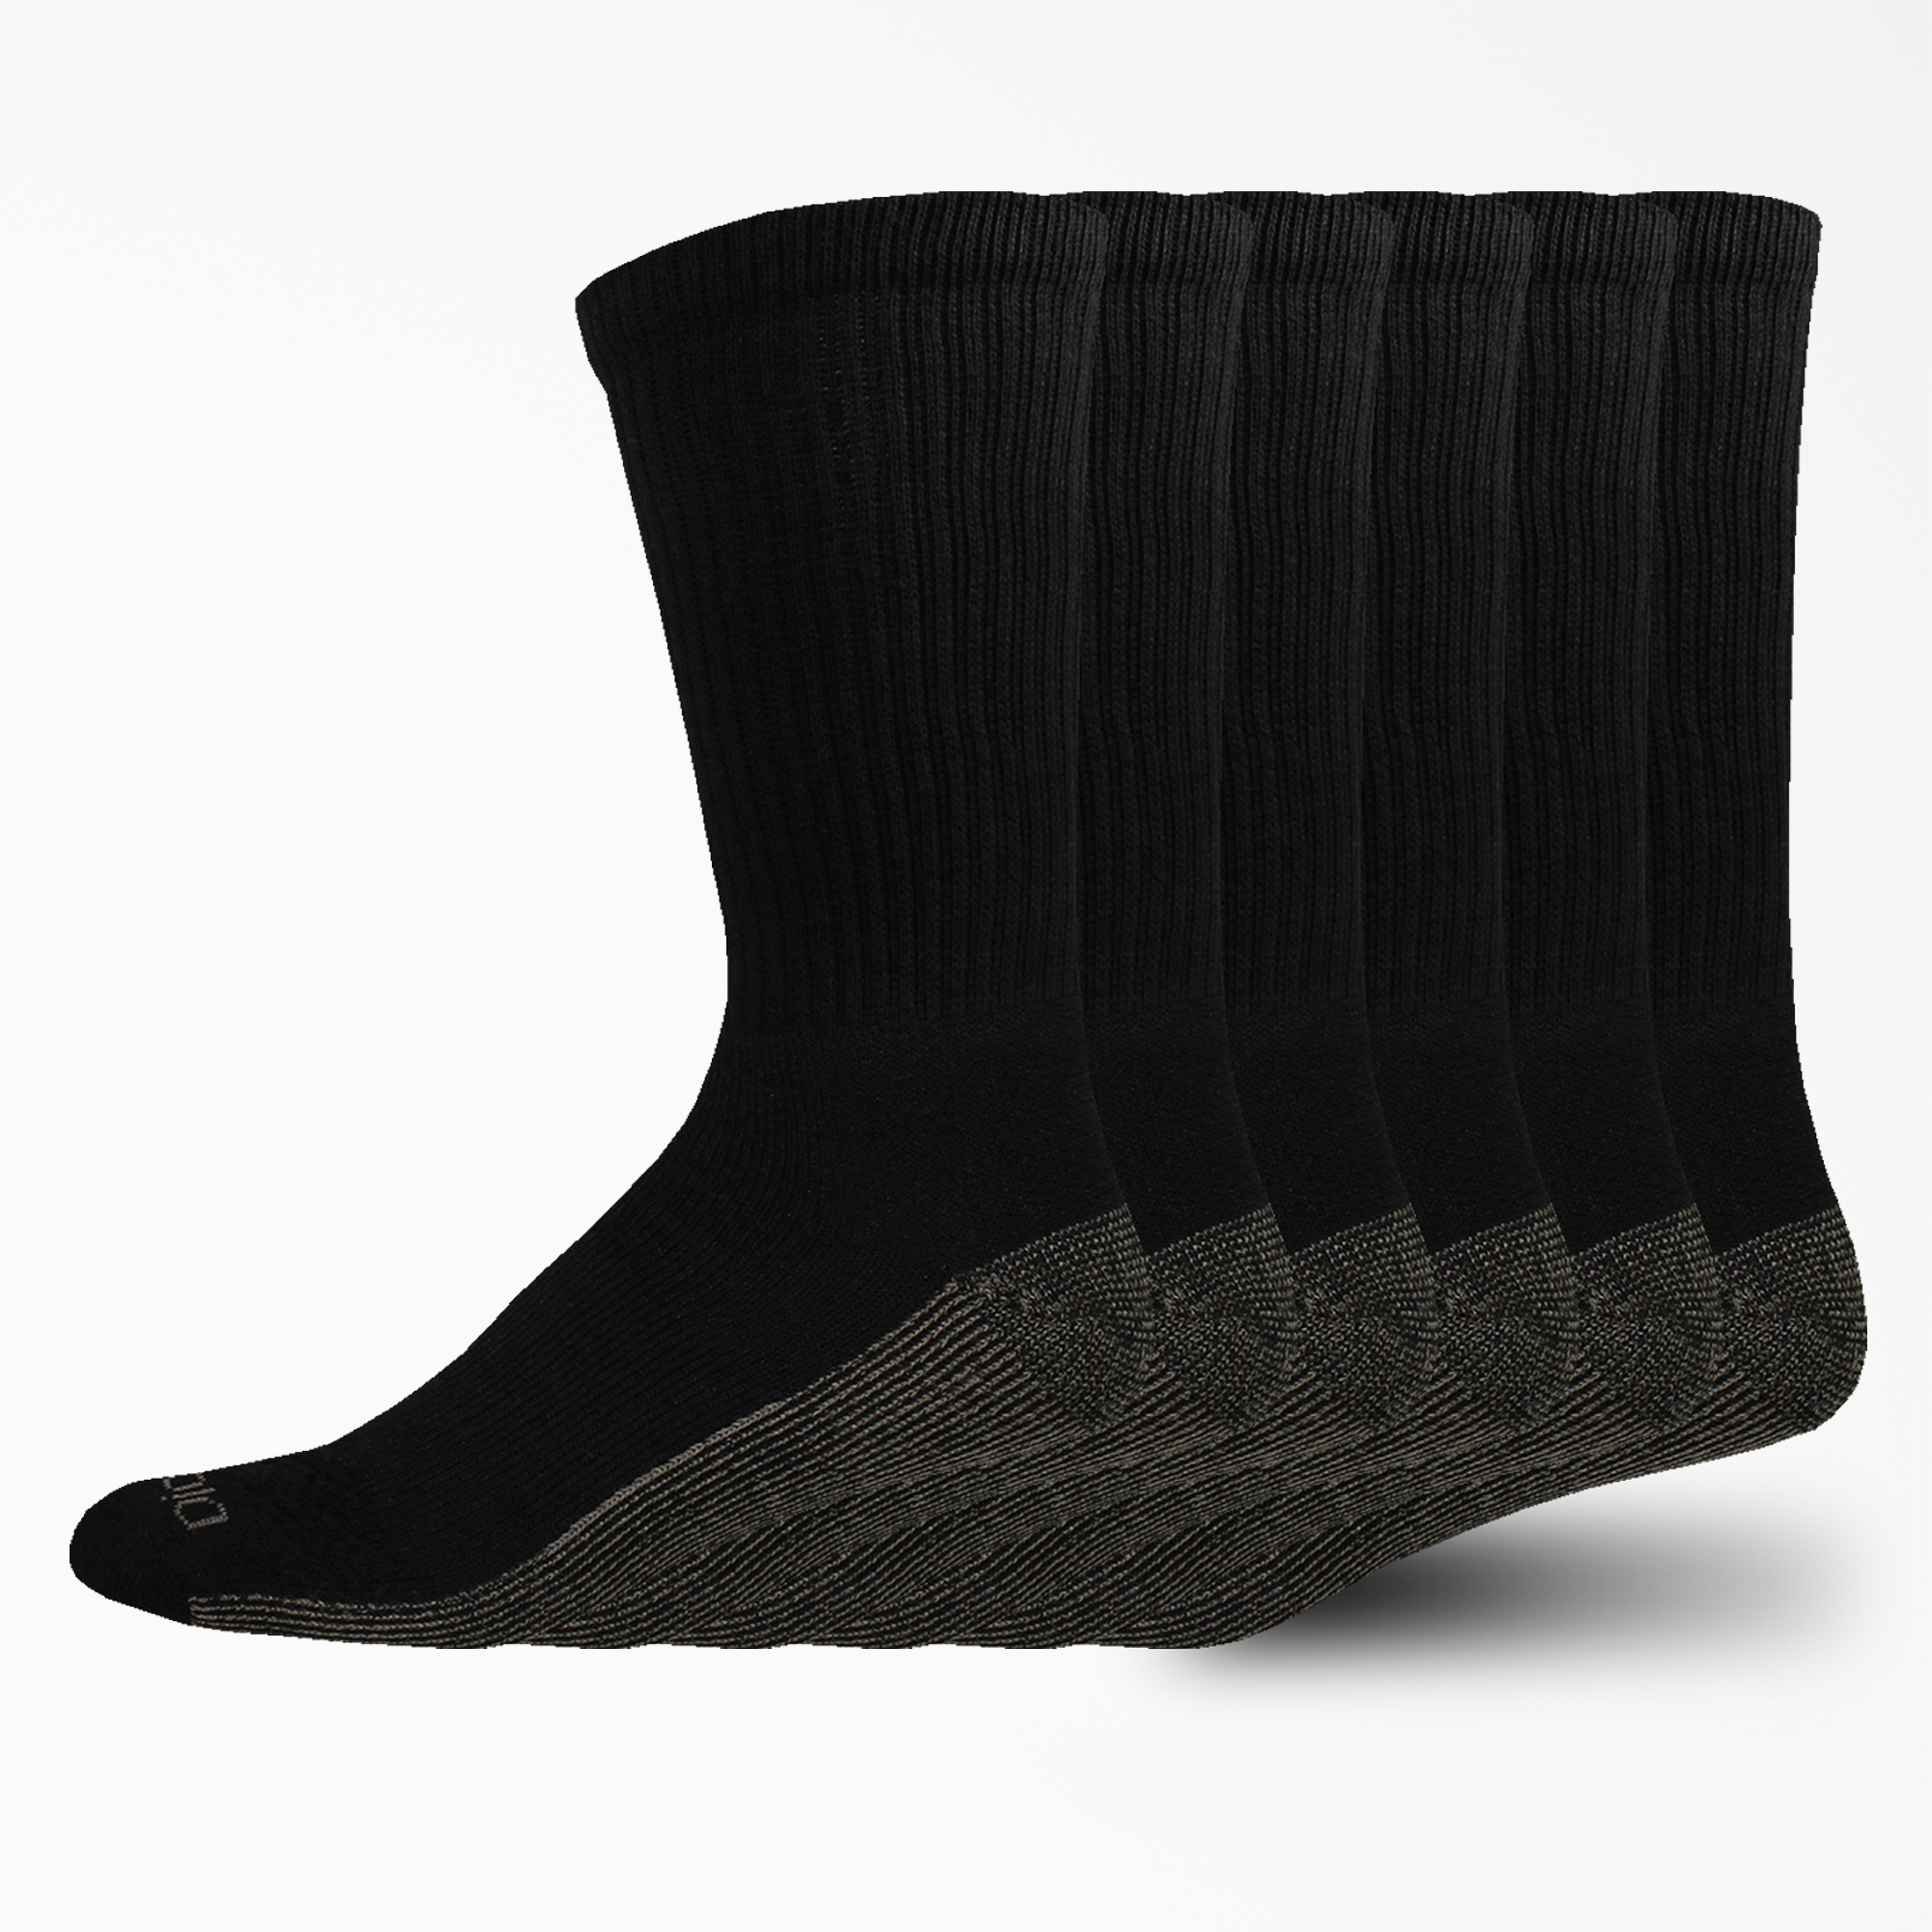 Moisture Control Crew Socks, Size 12-15, 6-Pack - Black (BK)